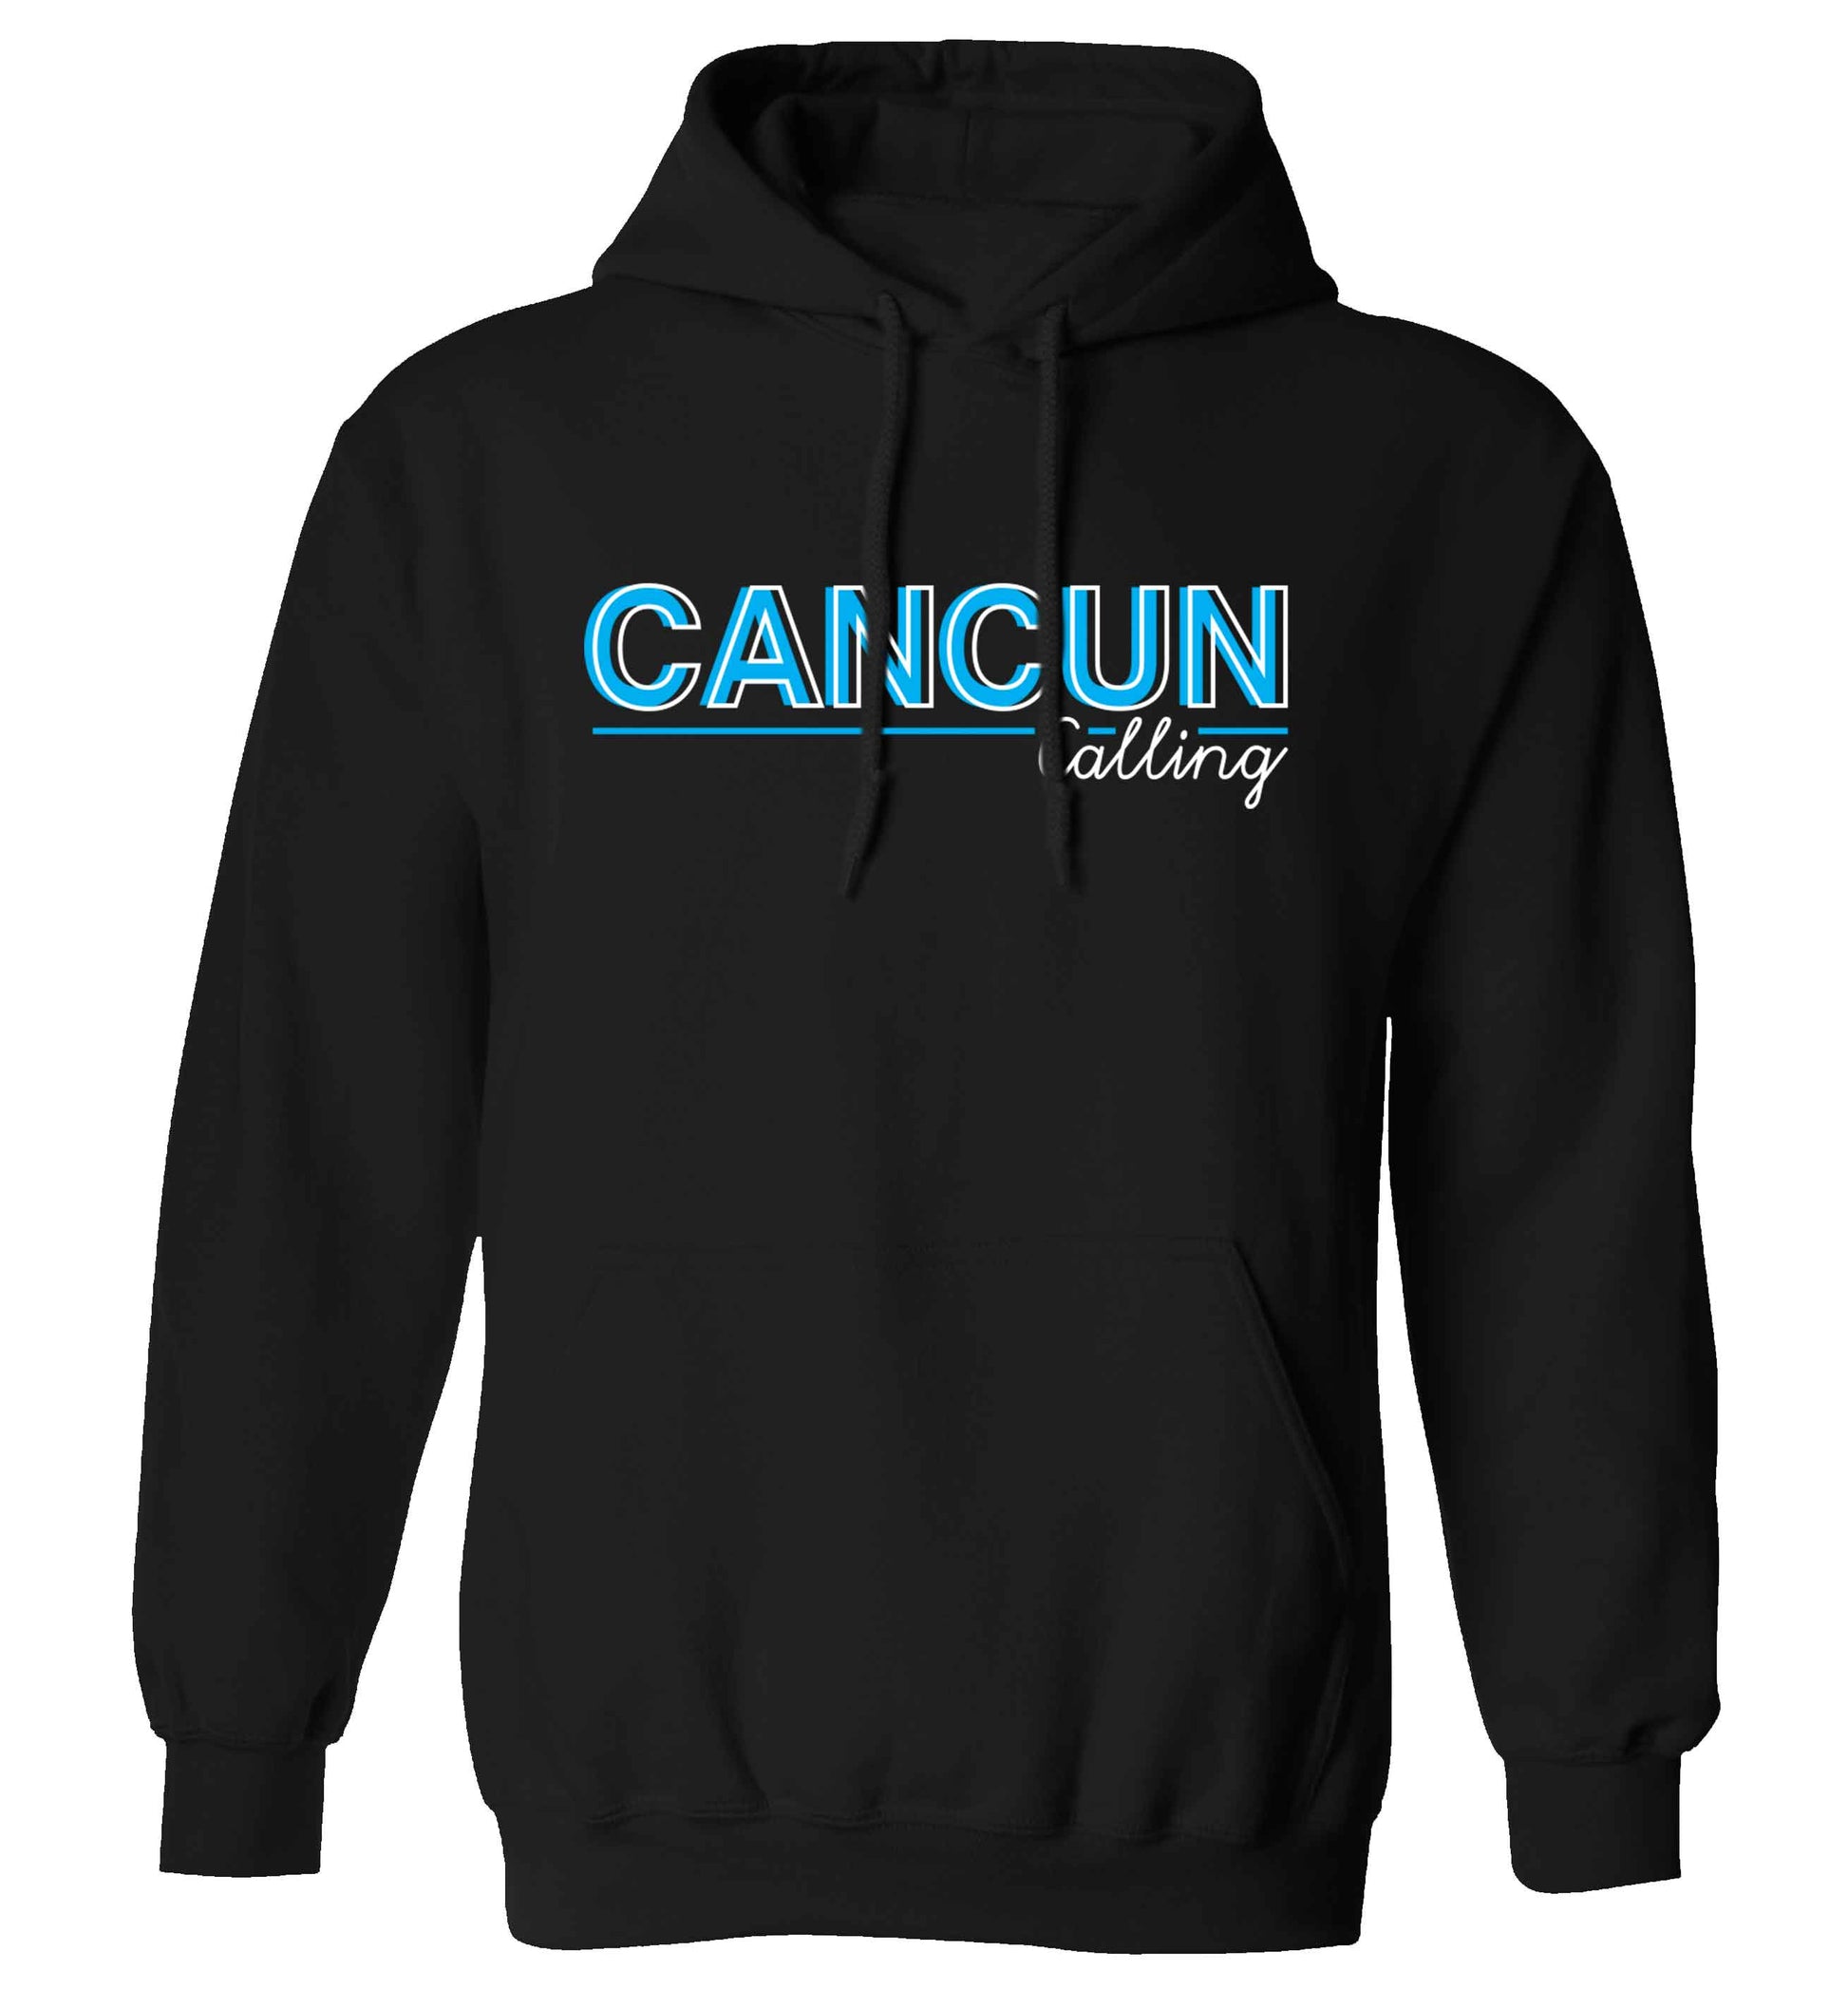 Cancun calling adults unisex black hoodie 2XL